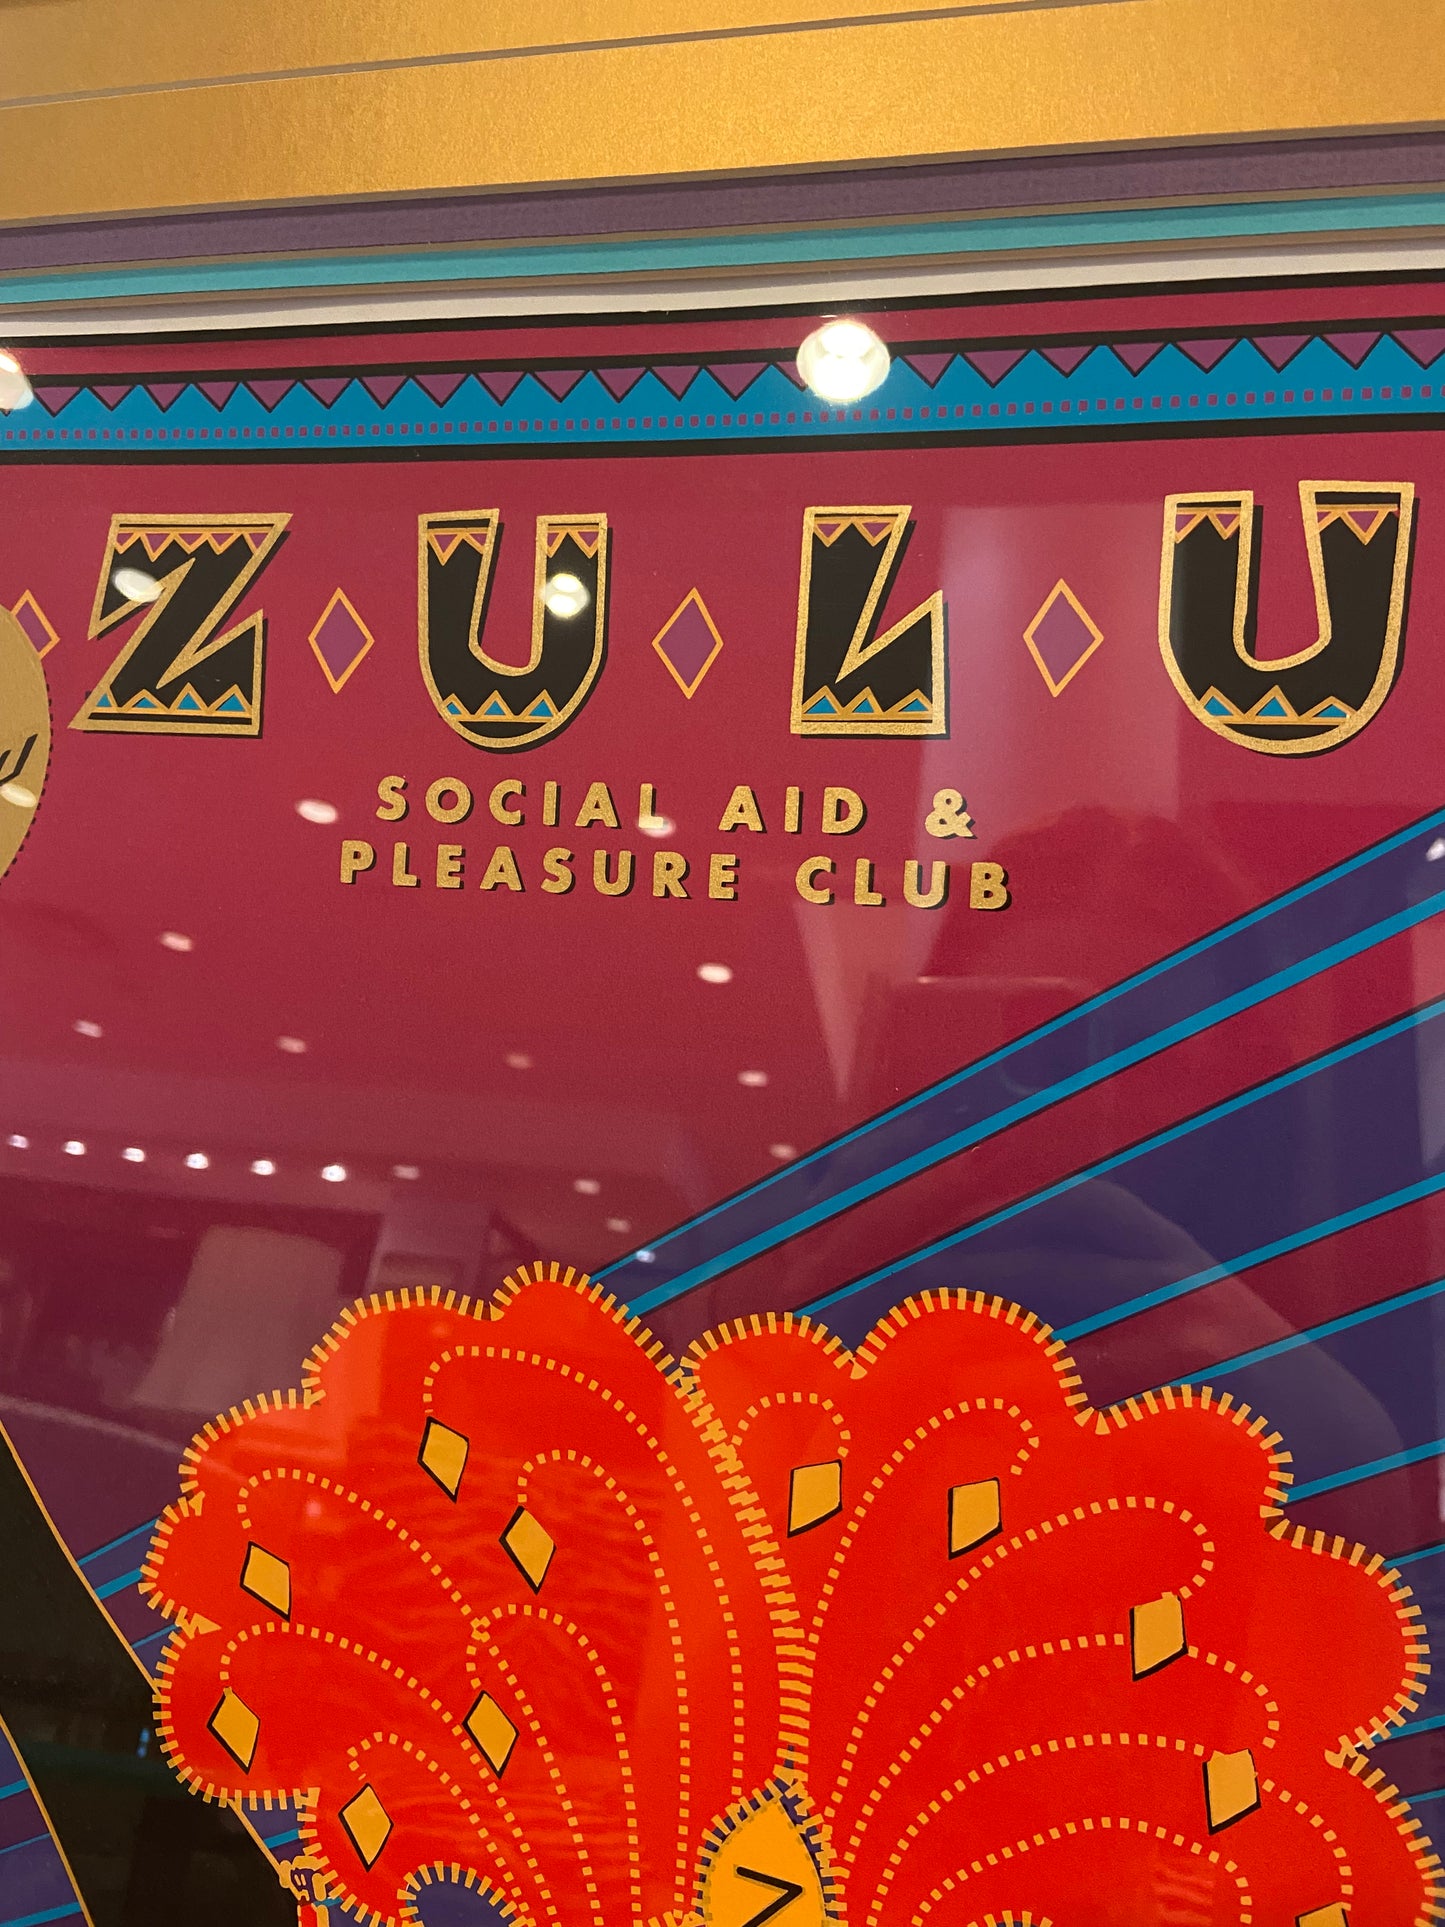 Zulu Social and Pleasure Club Limited Edition Poster "Mr. Big Stuff" (25027)